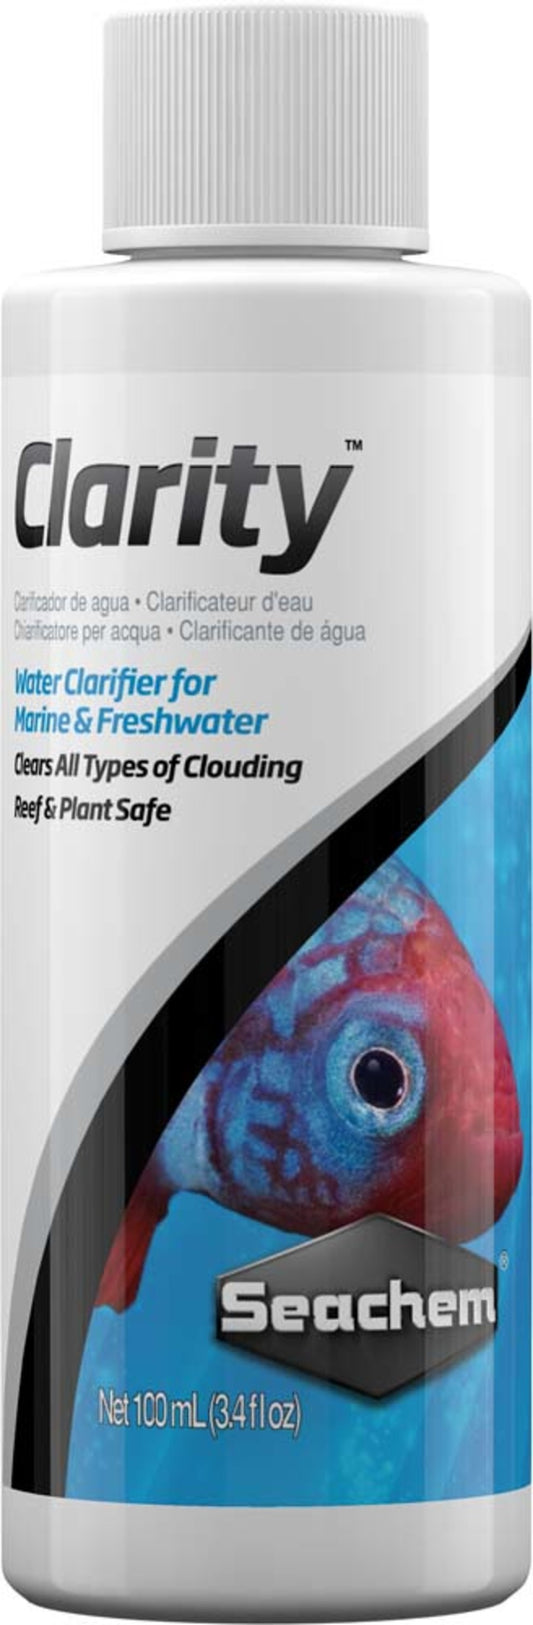 Seachem Laboratories Clarity Ultimate Water Clarifier 3.4 oz